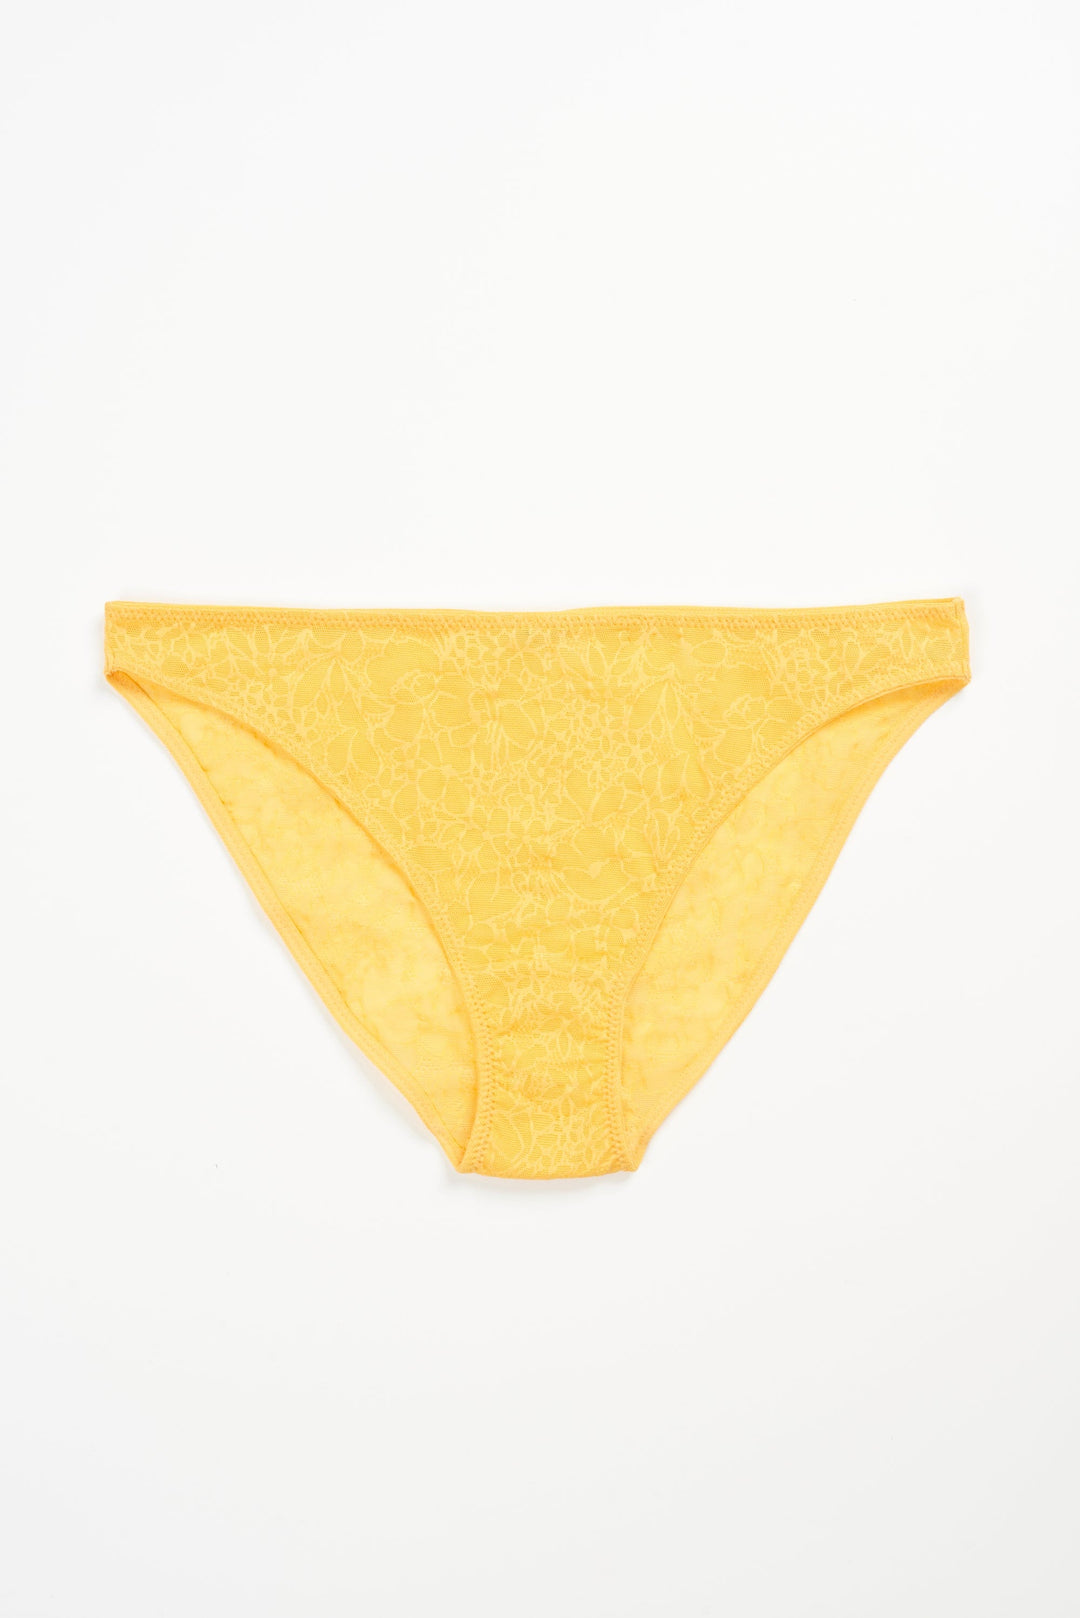 Else brief Pineapple (Yellow) / S Else Eden Bikini Brief